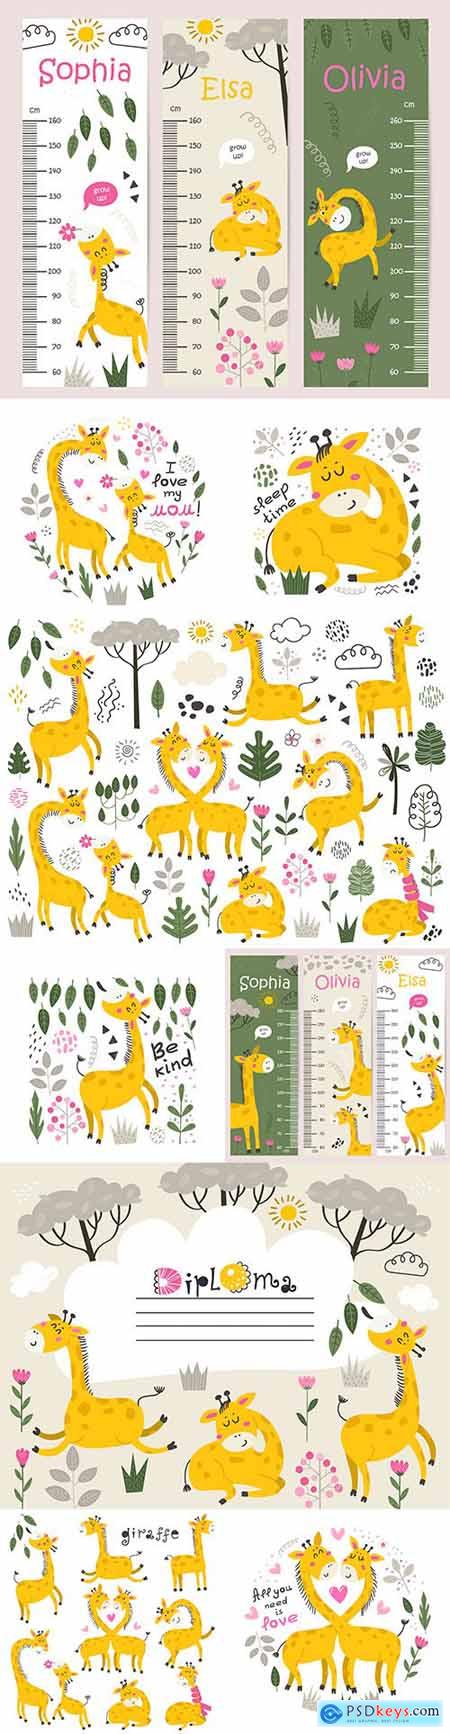 Cute painted giraffe and children s growth chart design